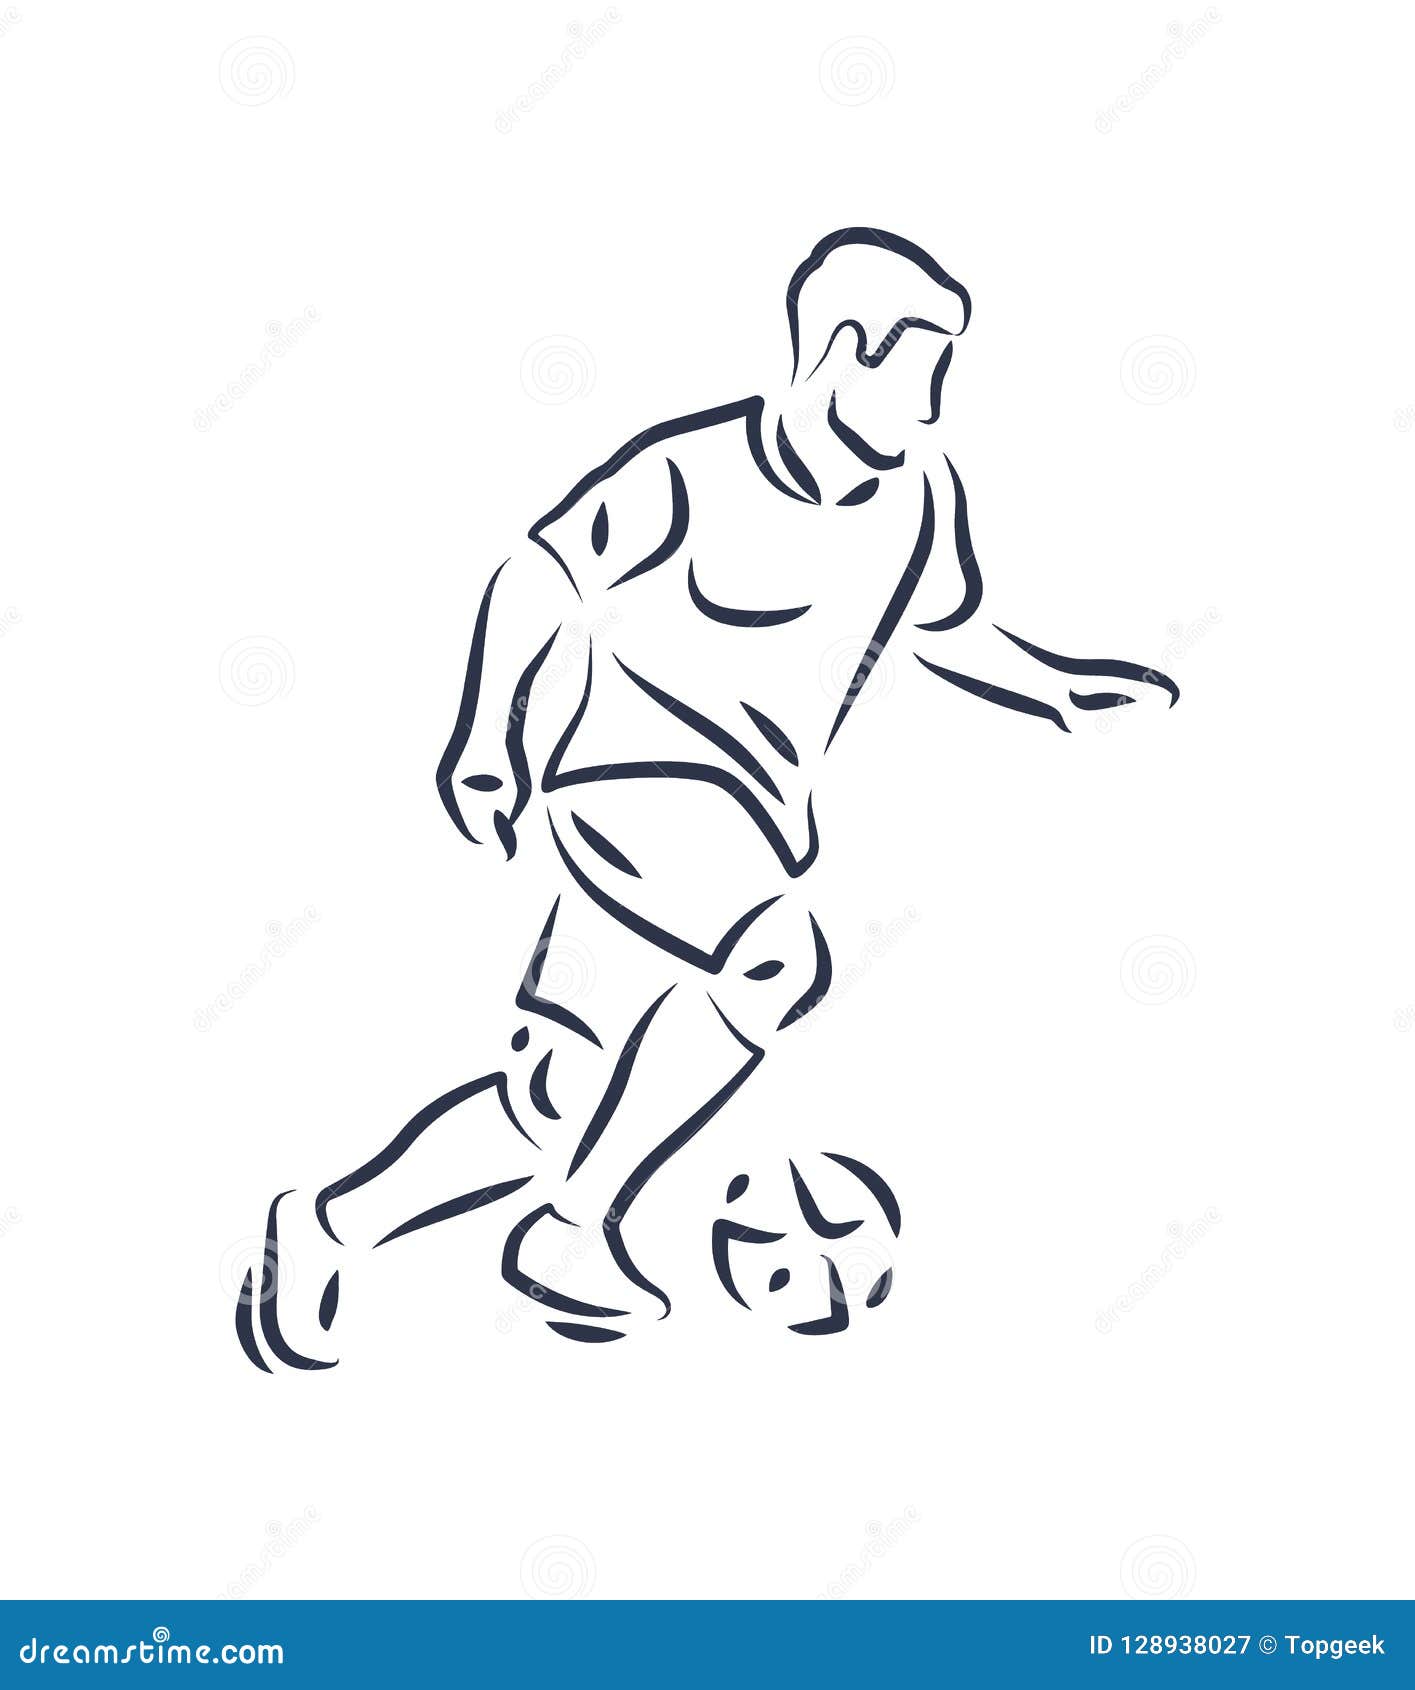 Drawing football players ronaldo / cristiano ronaldo drawing of sketches..  - YouTube